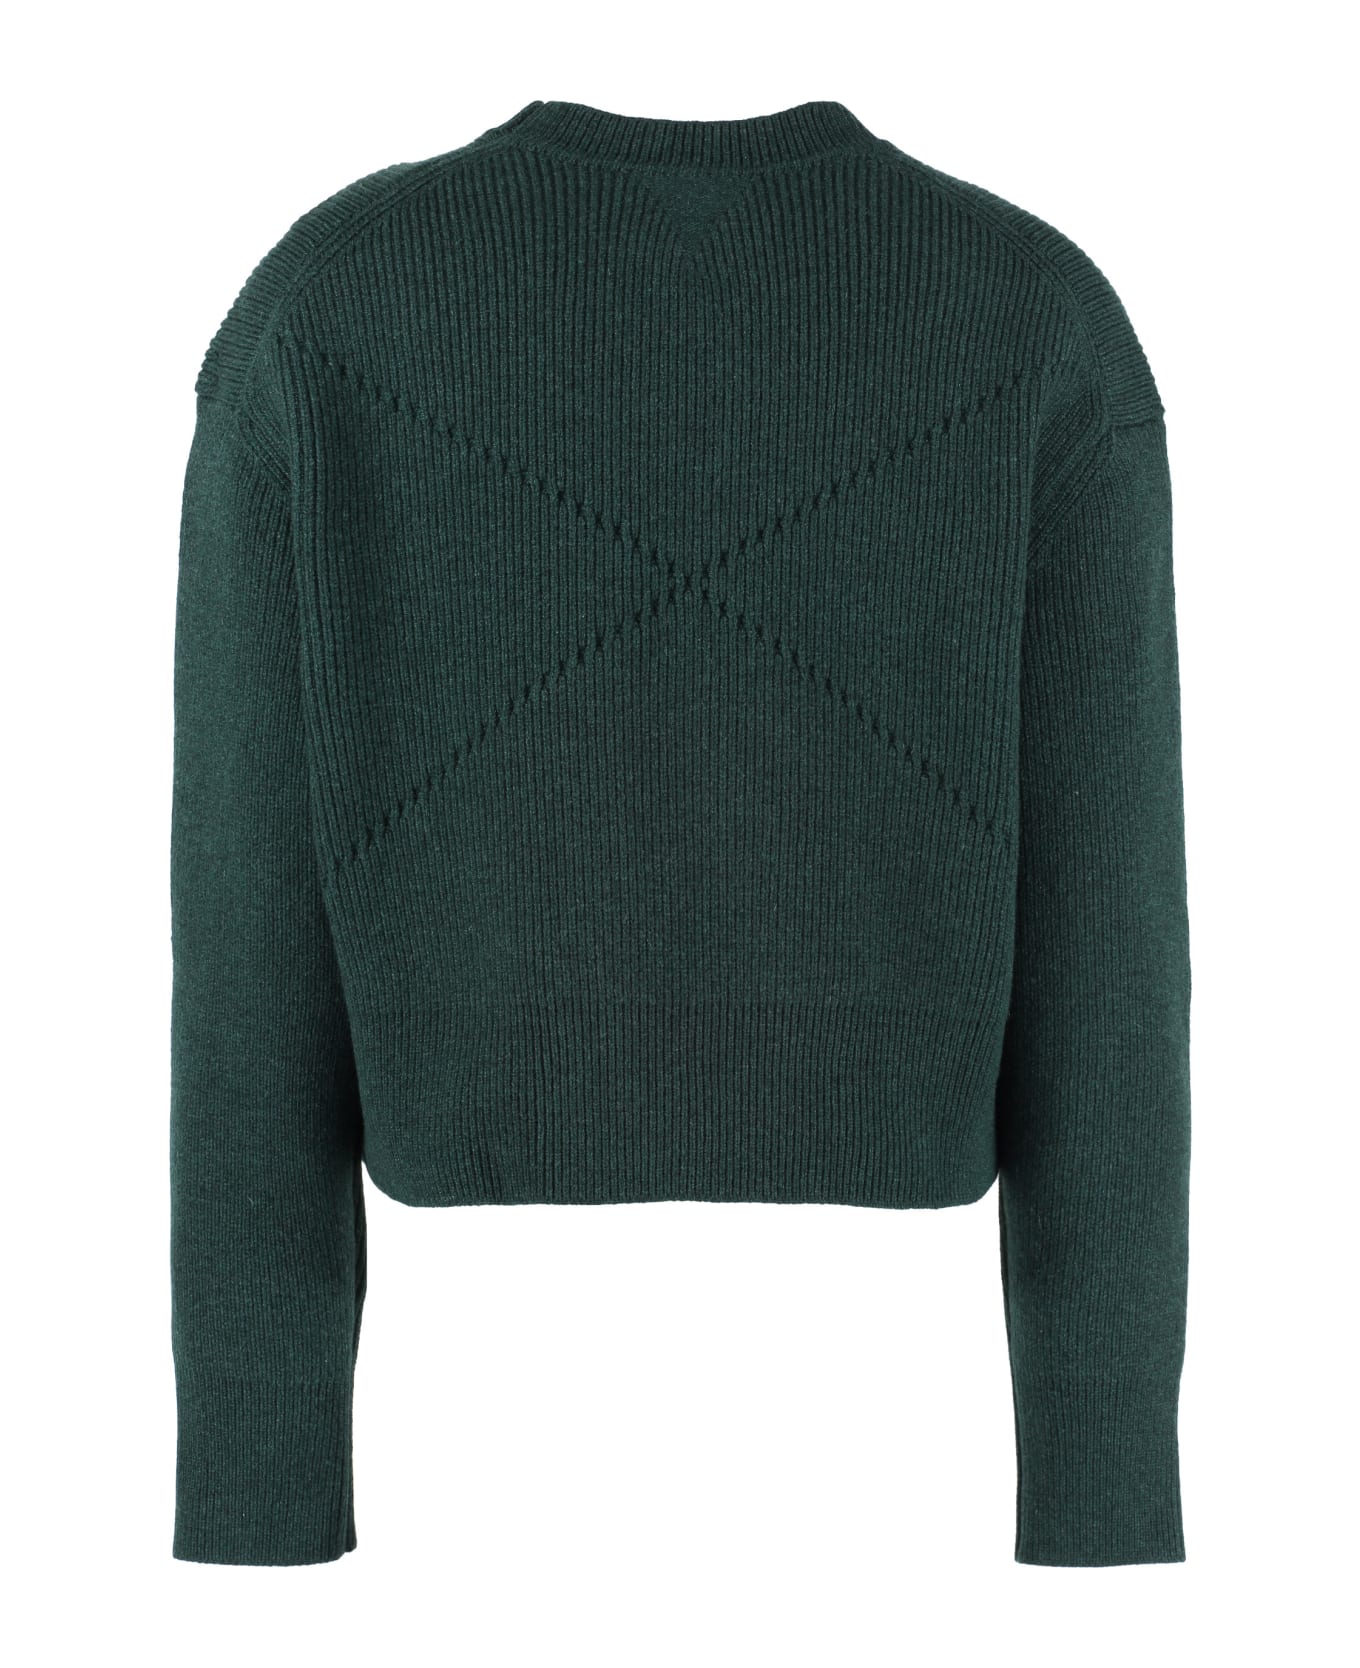 Bottega Veneta Ribbed Cashmere Sweater - green